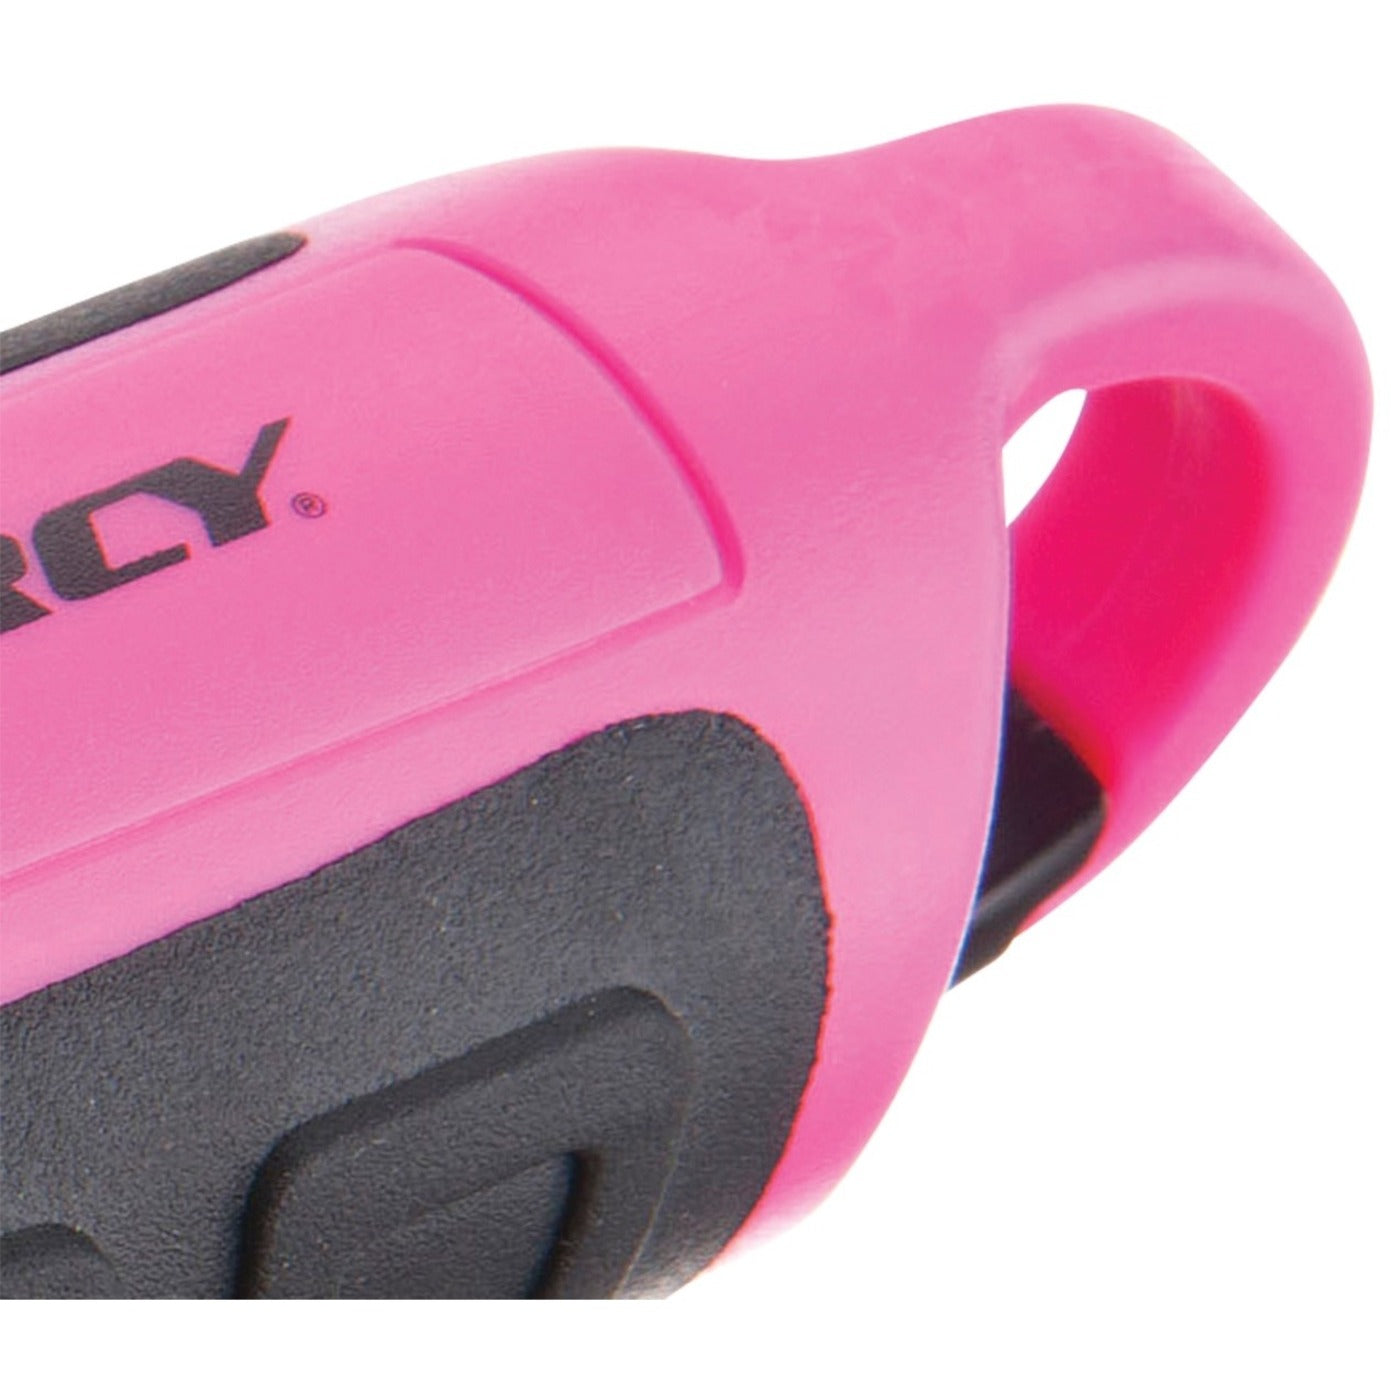 Dorcy 41-2509 55 Lumen Floating Pink Flashlight, Water Proof, Shock Absorbing, Slip Resistant